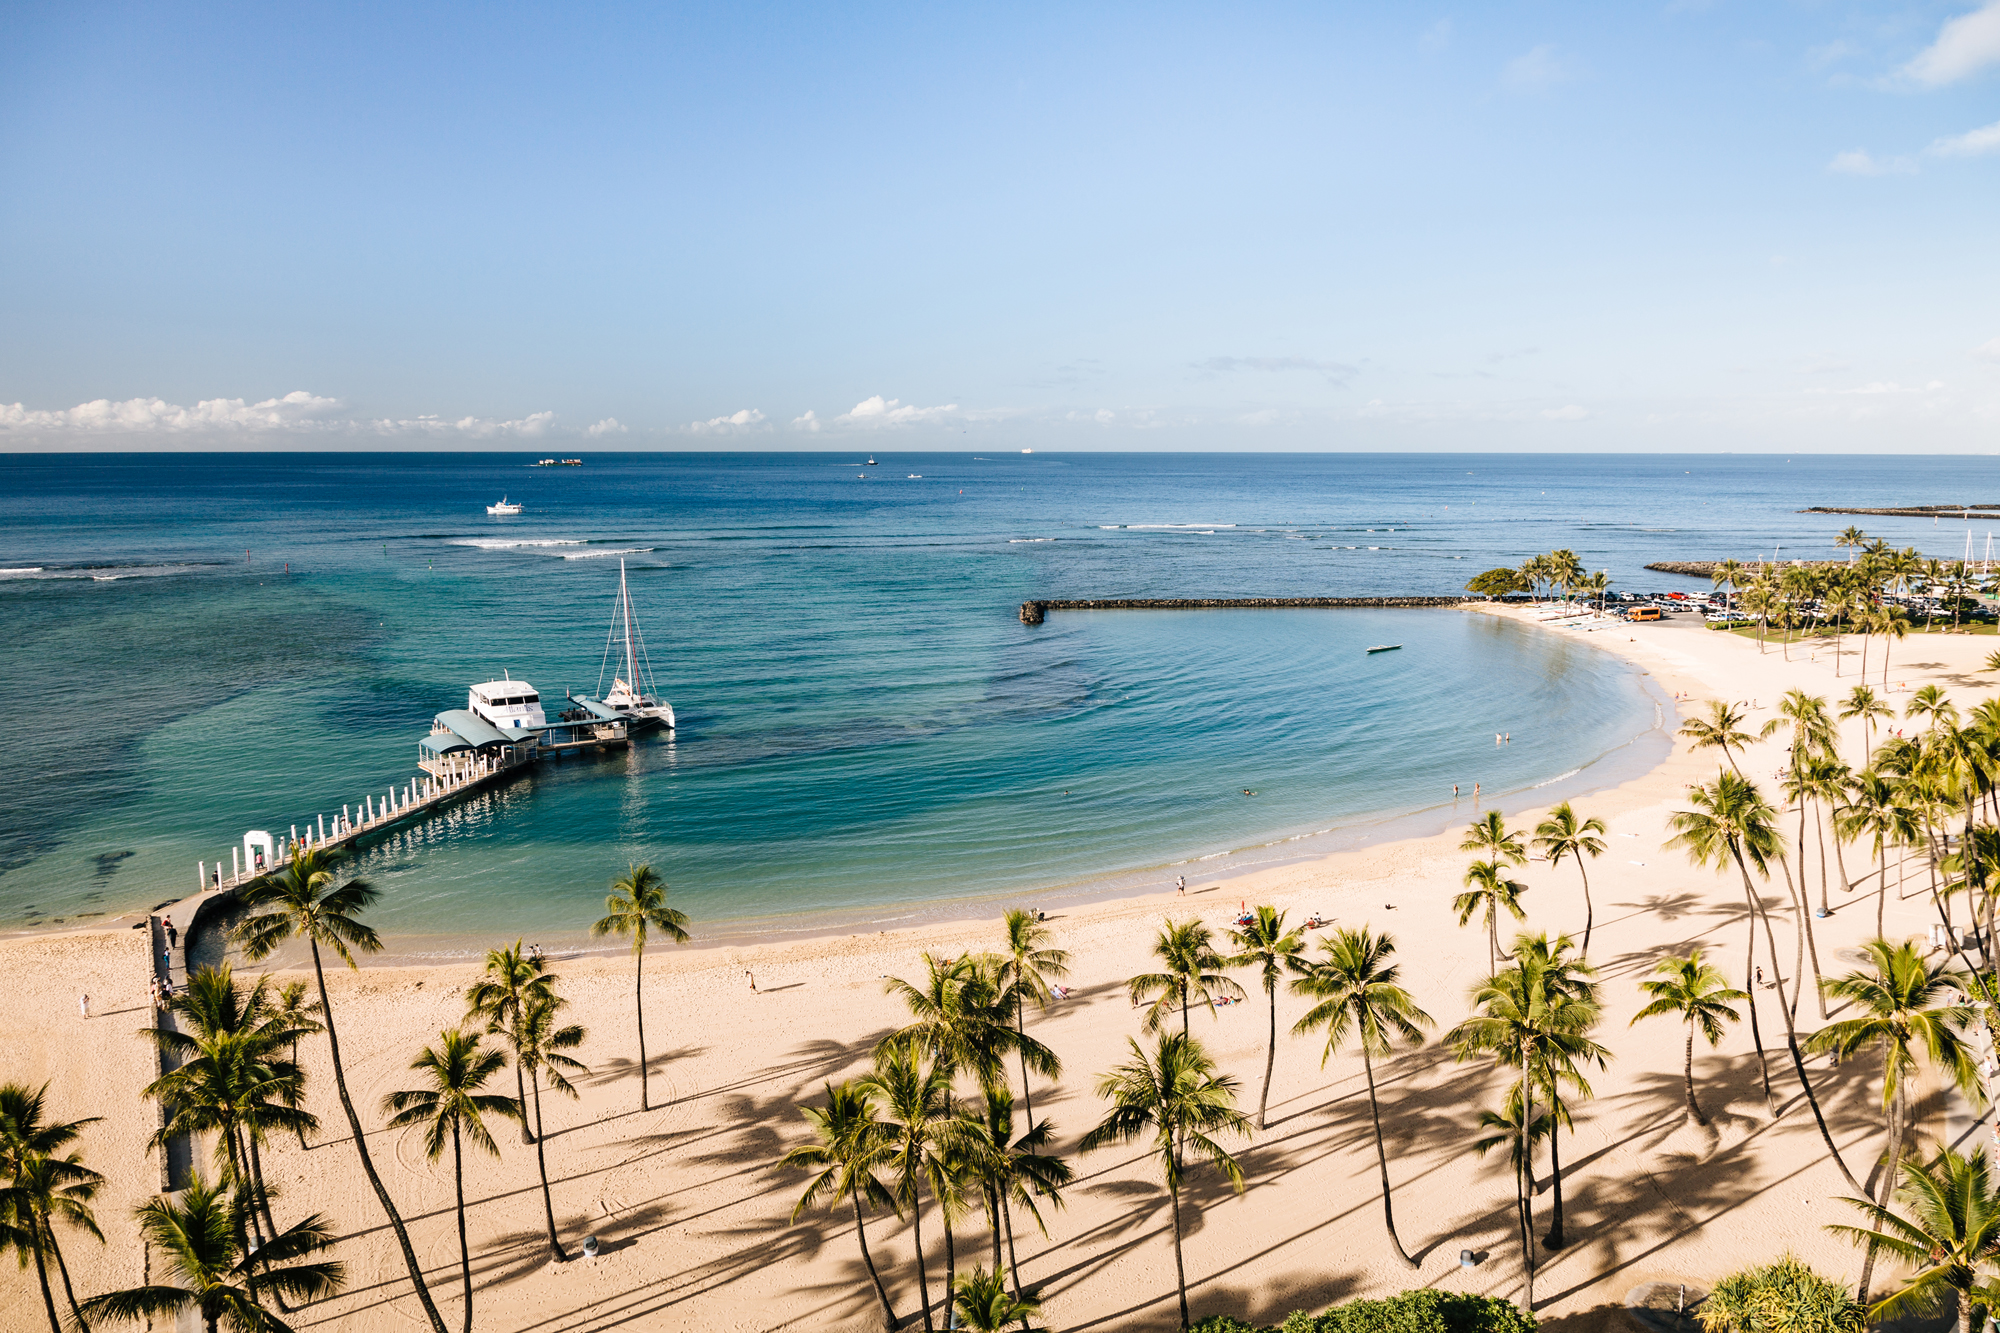 Waikiki Beach, Honolulu, seen from the Hilton resort